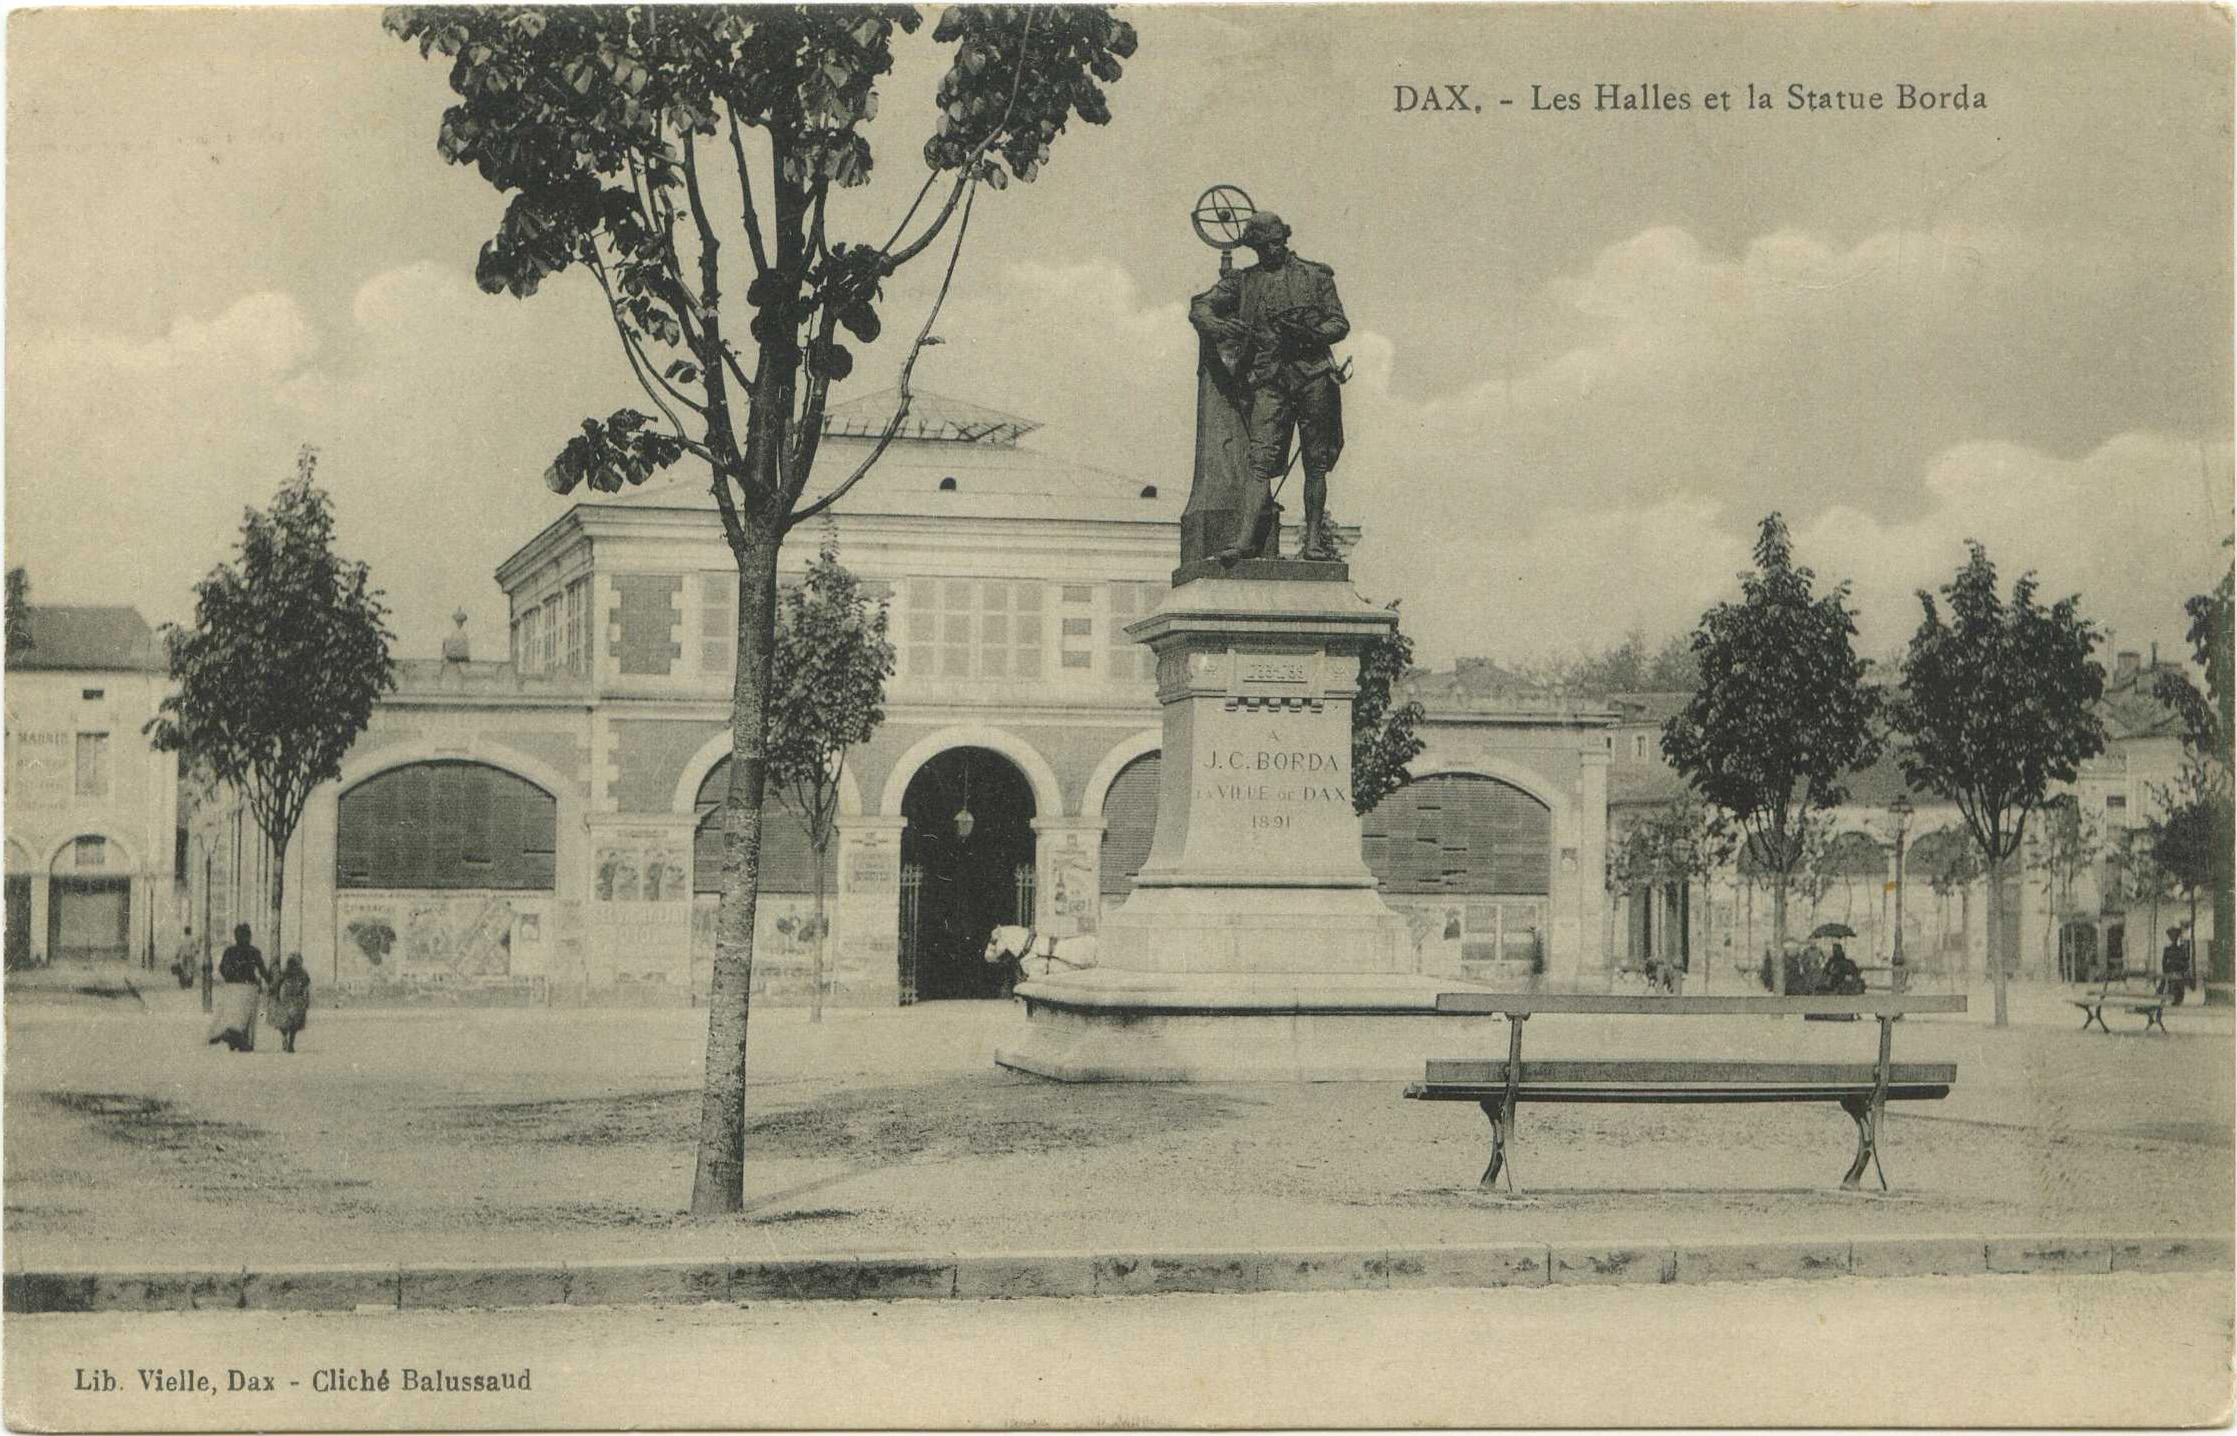 Dax - Les Halles et la Statue Borda